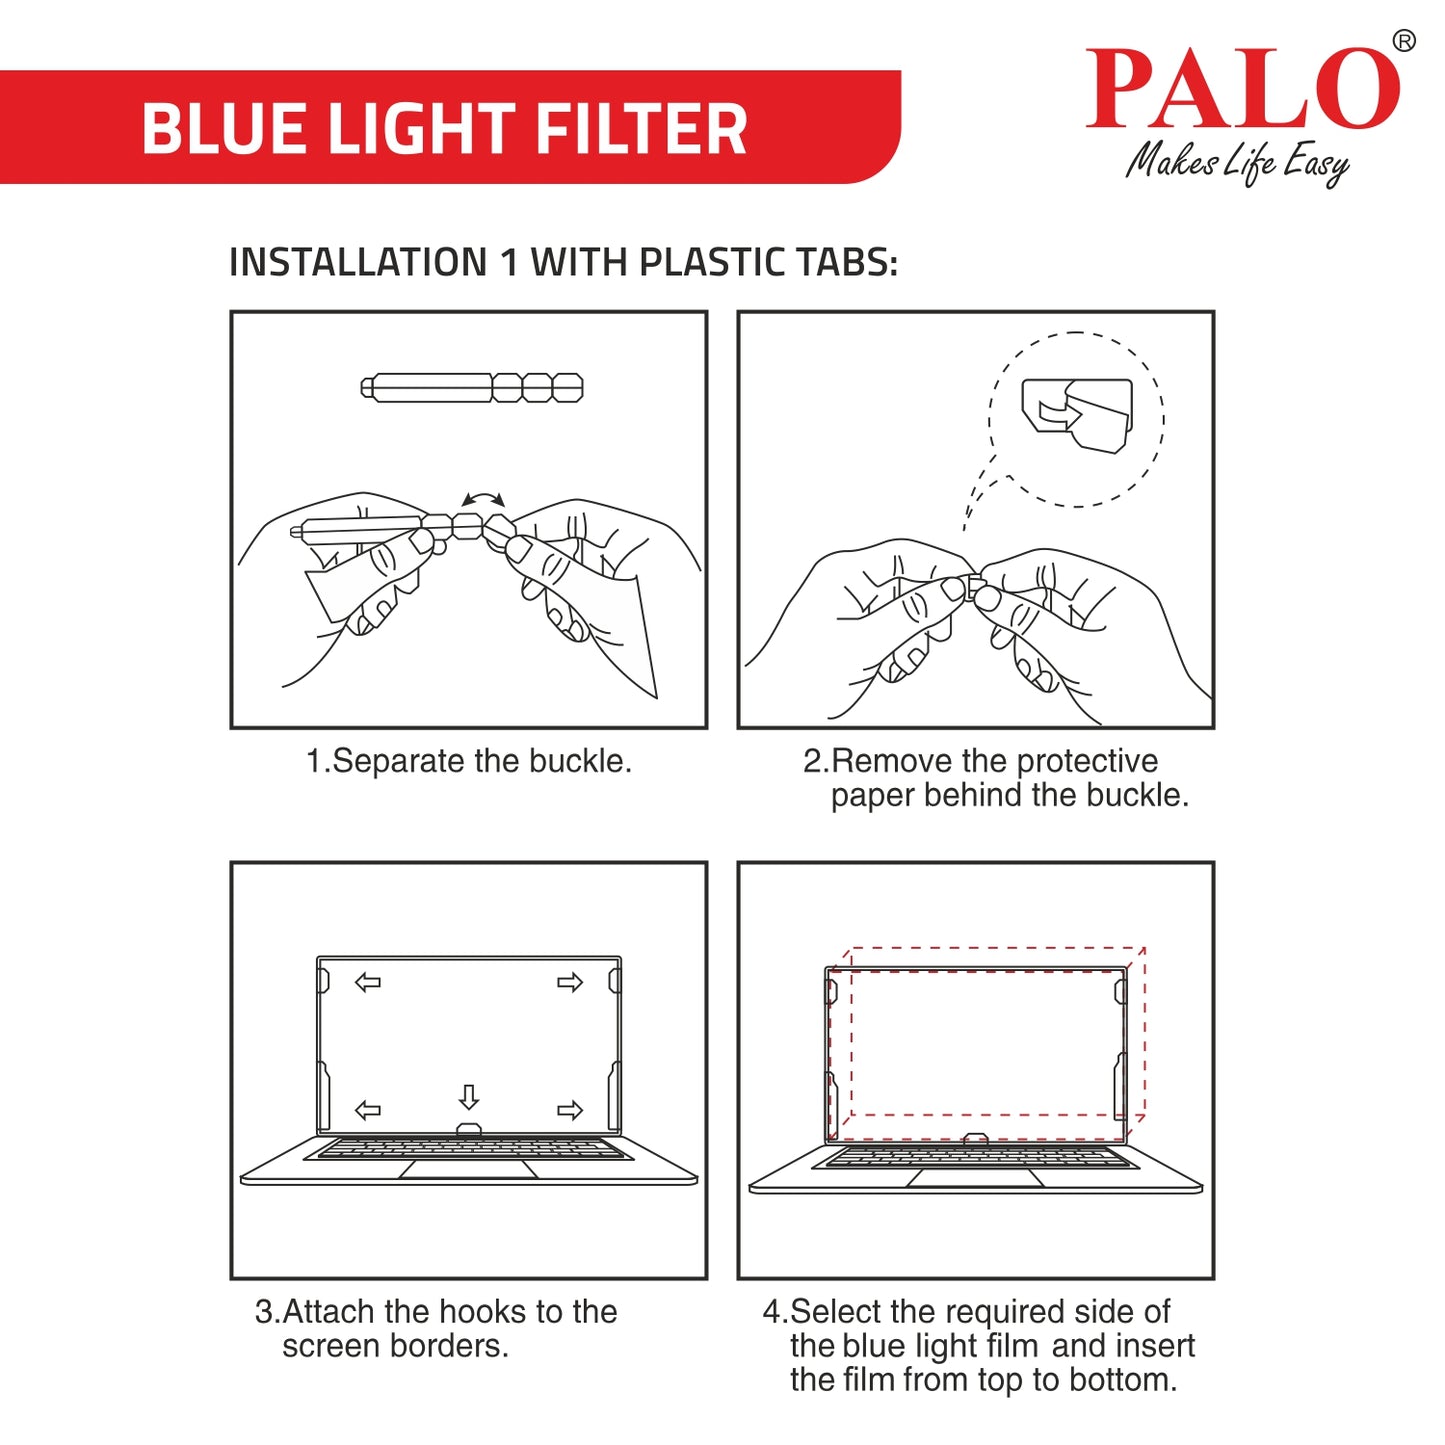 PALO MyDATA Blue Light Filter for Laptops